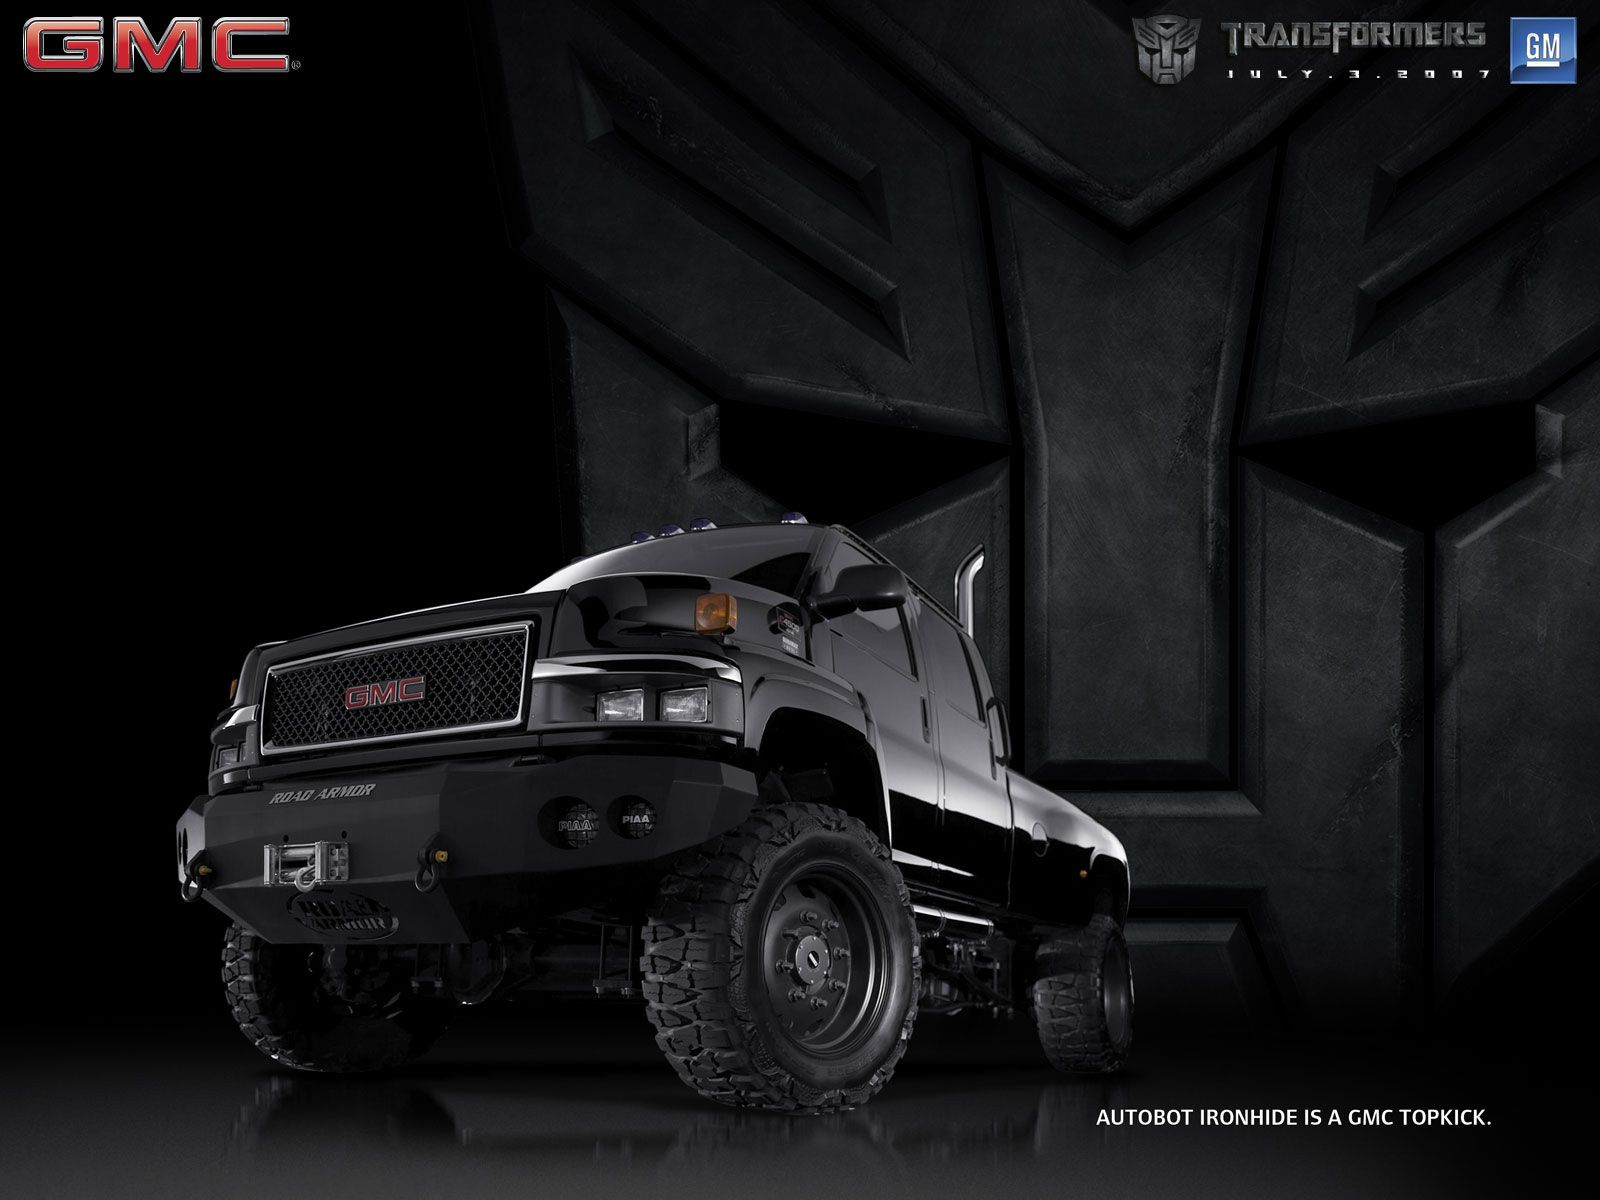 Gmc Topkick Ftw Autos And Motos Monster Trucks